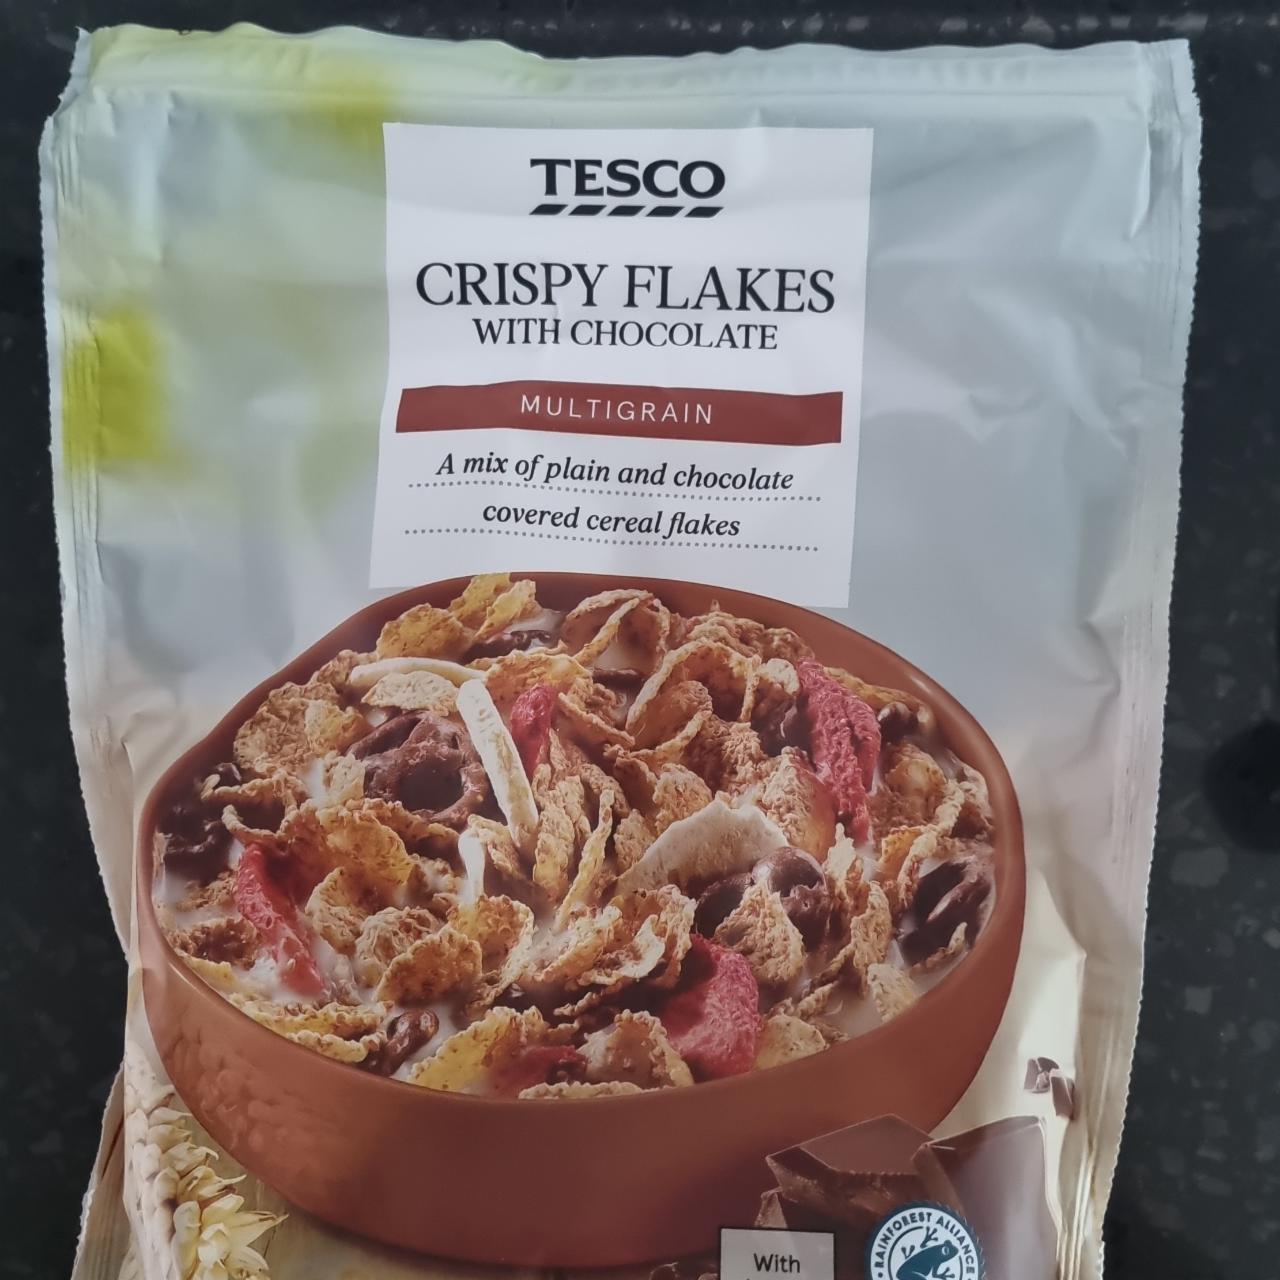 Képek - Crispy flakes with chocolate Tesco